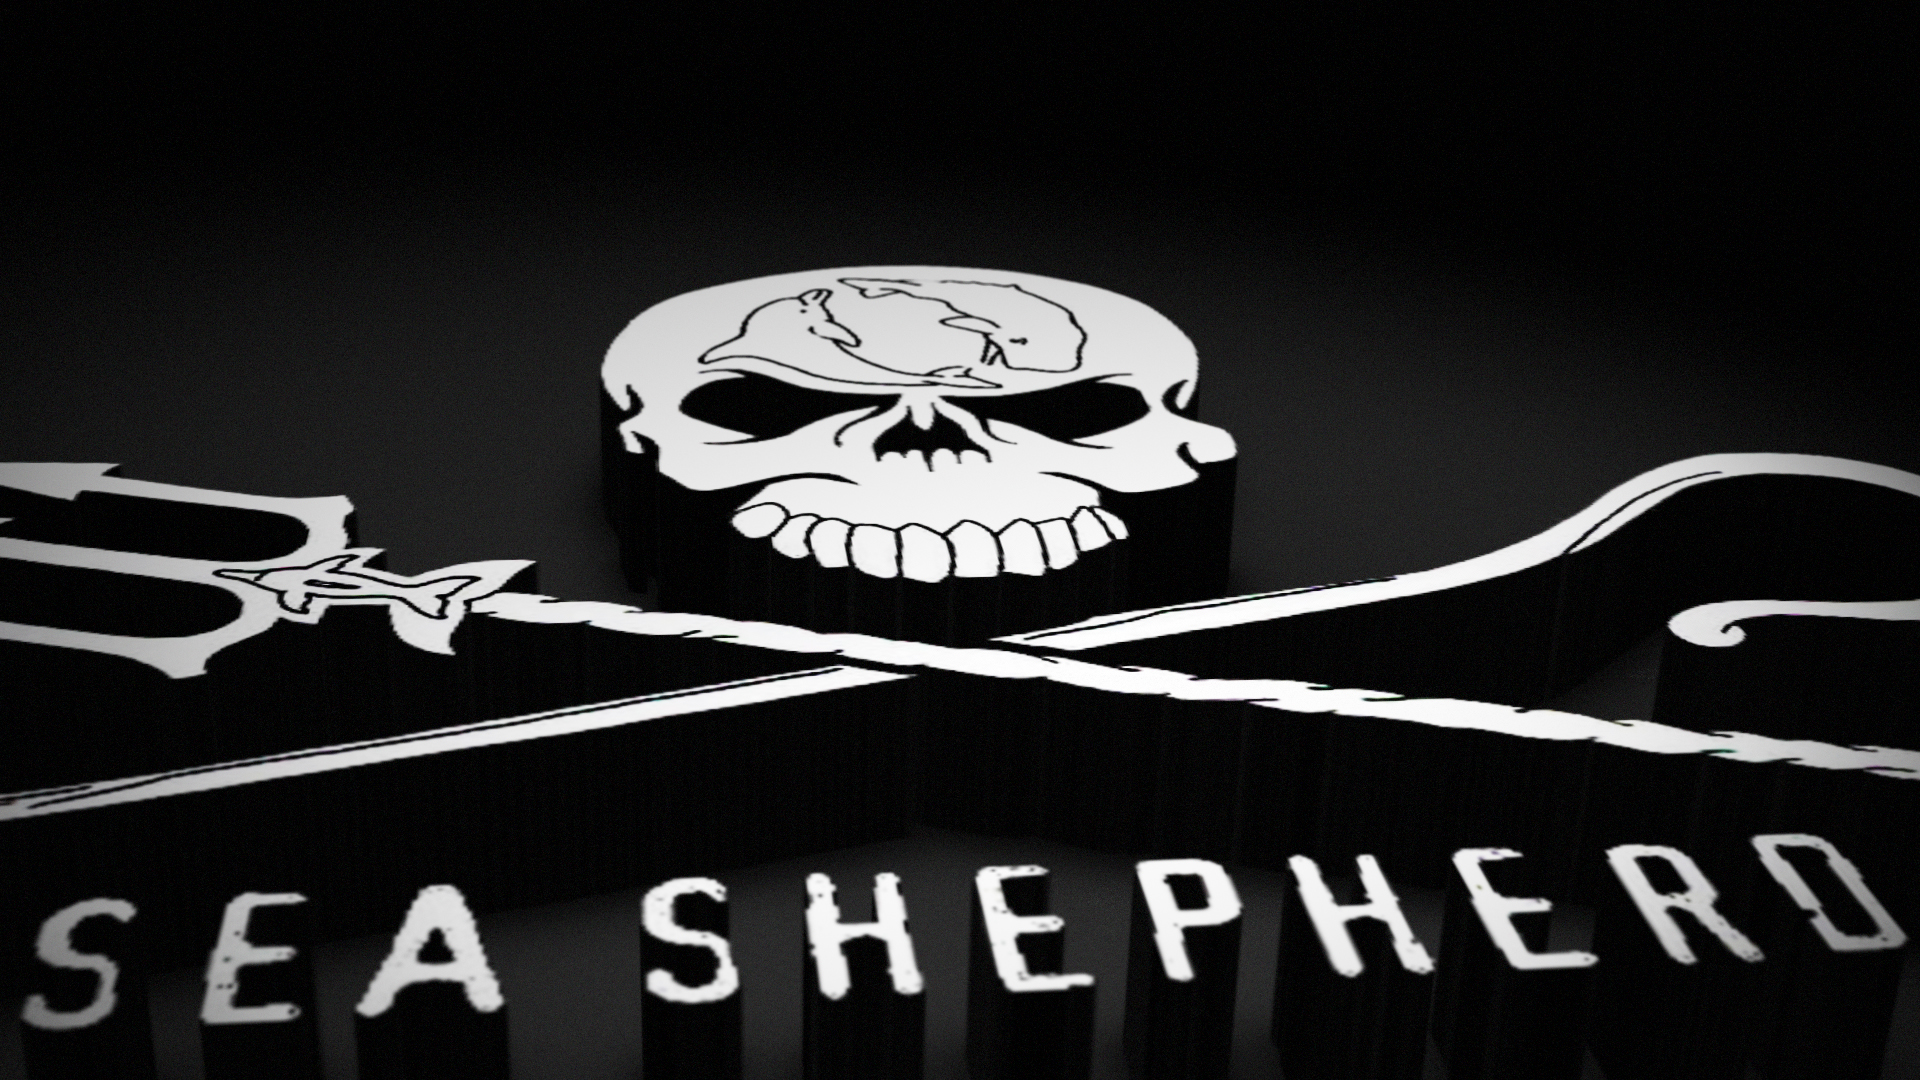 sea shepherd wallpaper,bone,skull,font,logo,automotive decal